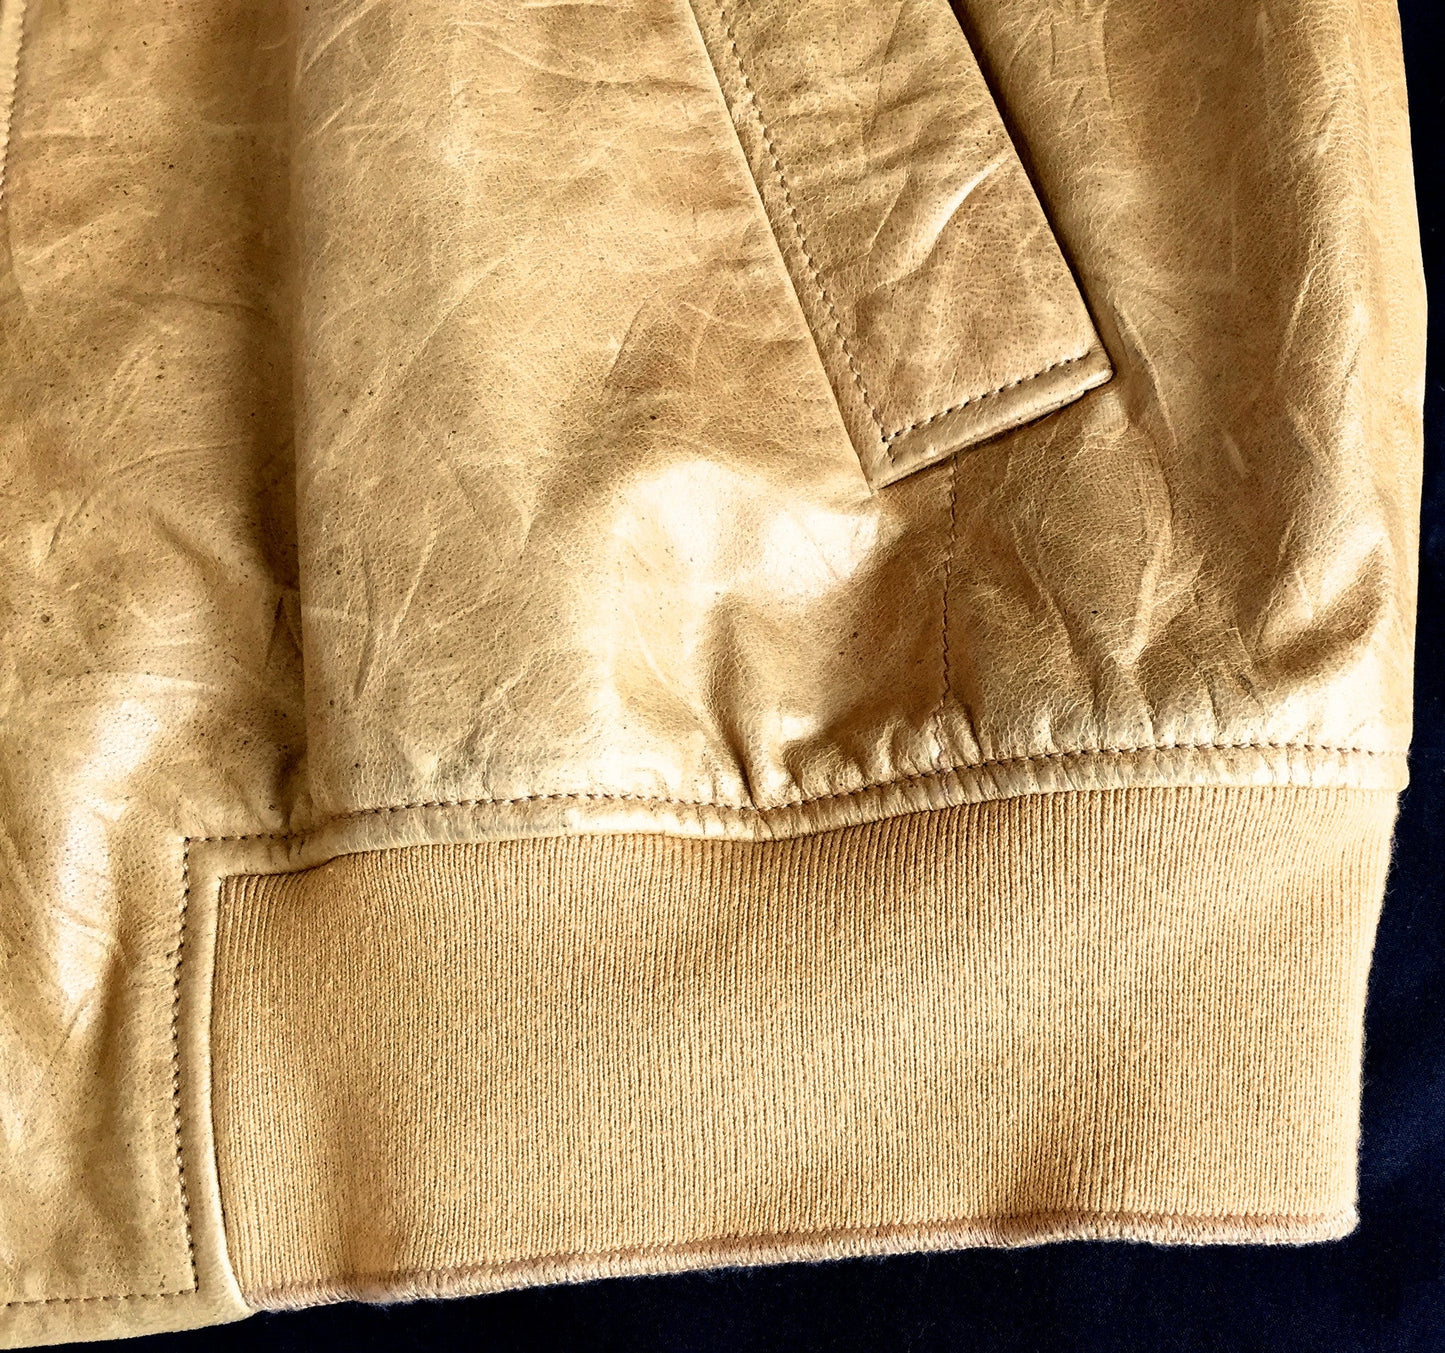 Yves Saint Laurent - Distressed Tan Leather Bomber Jacket